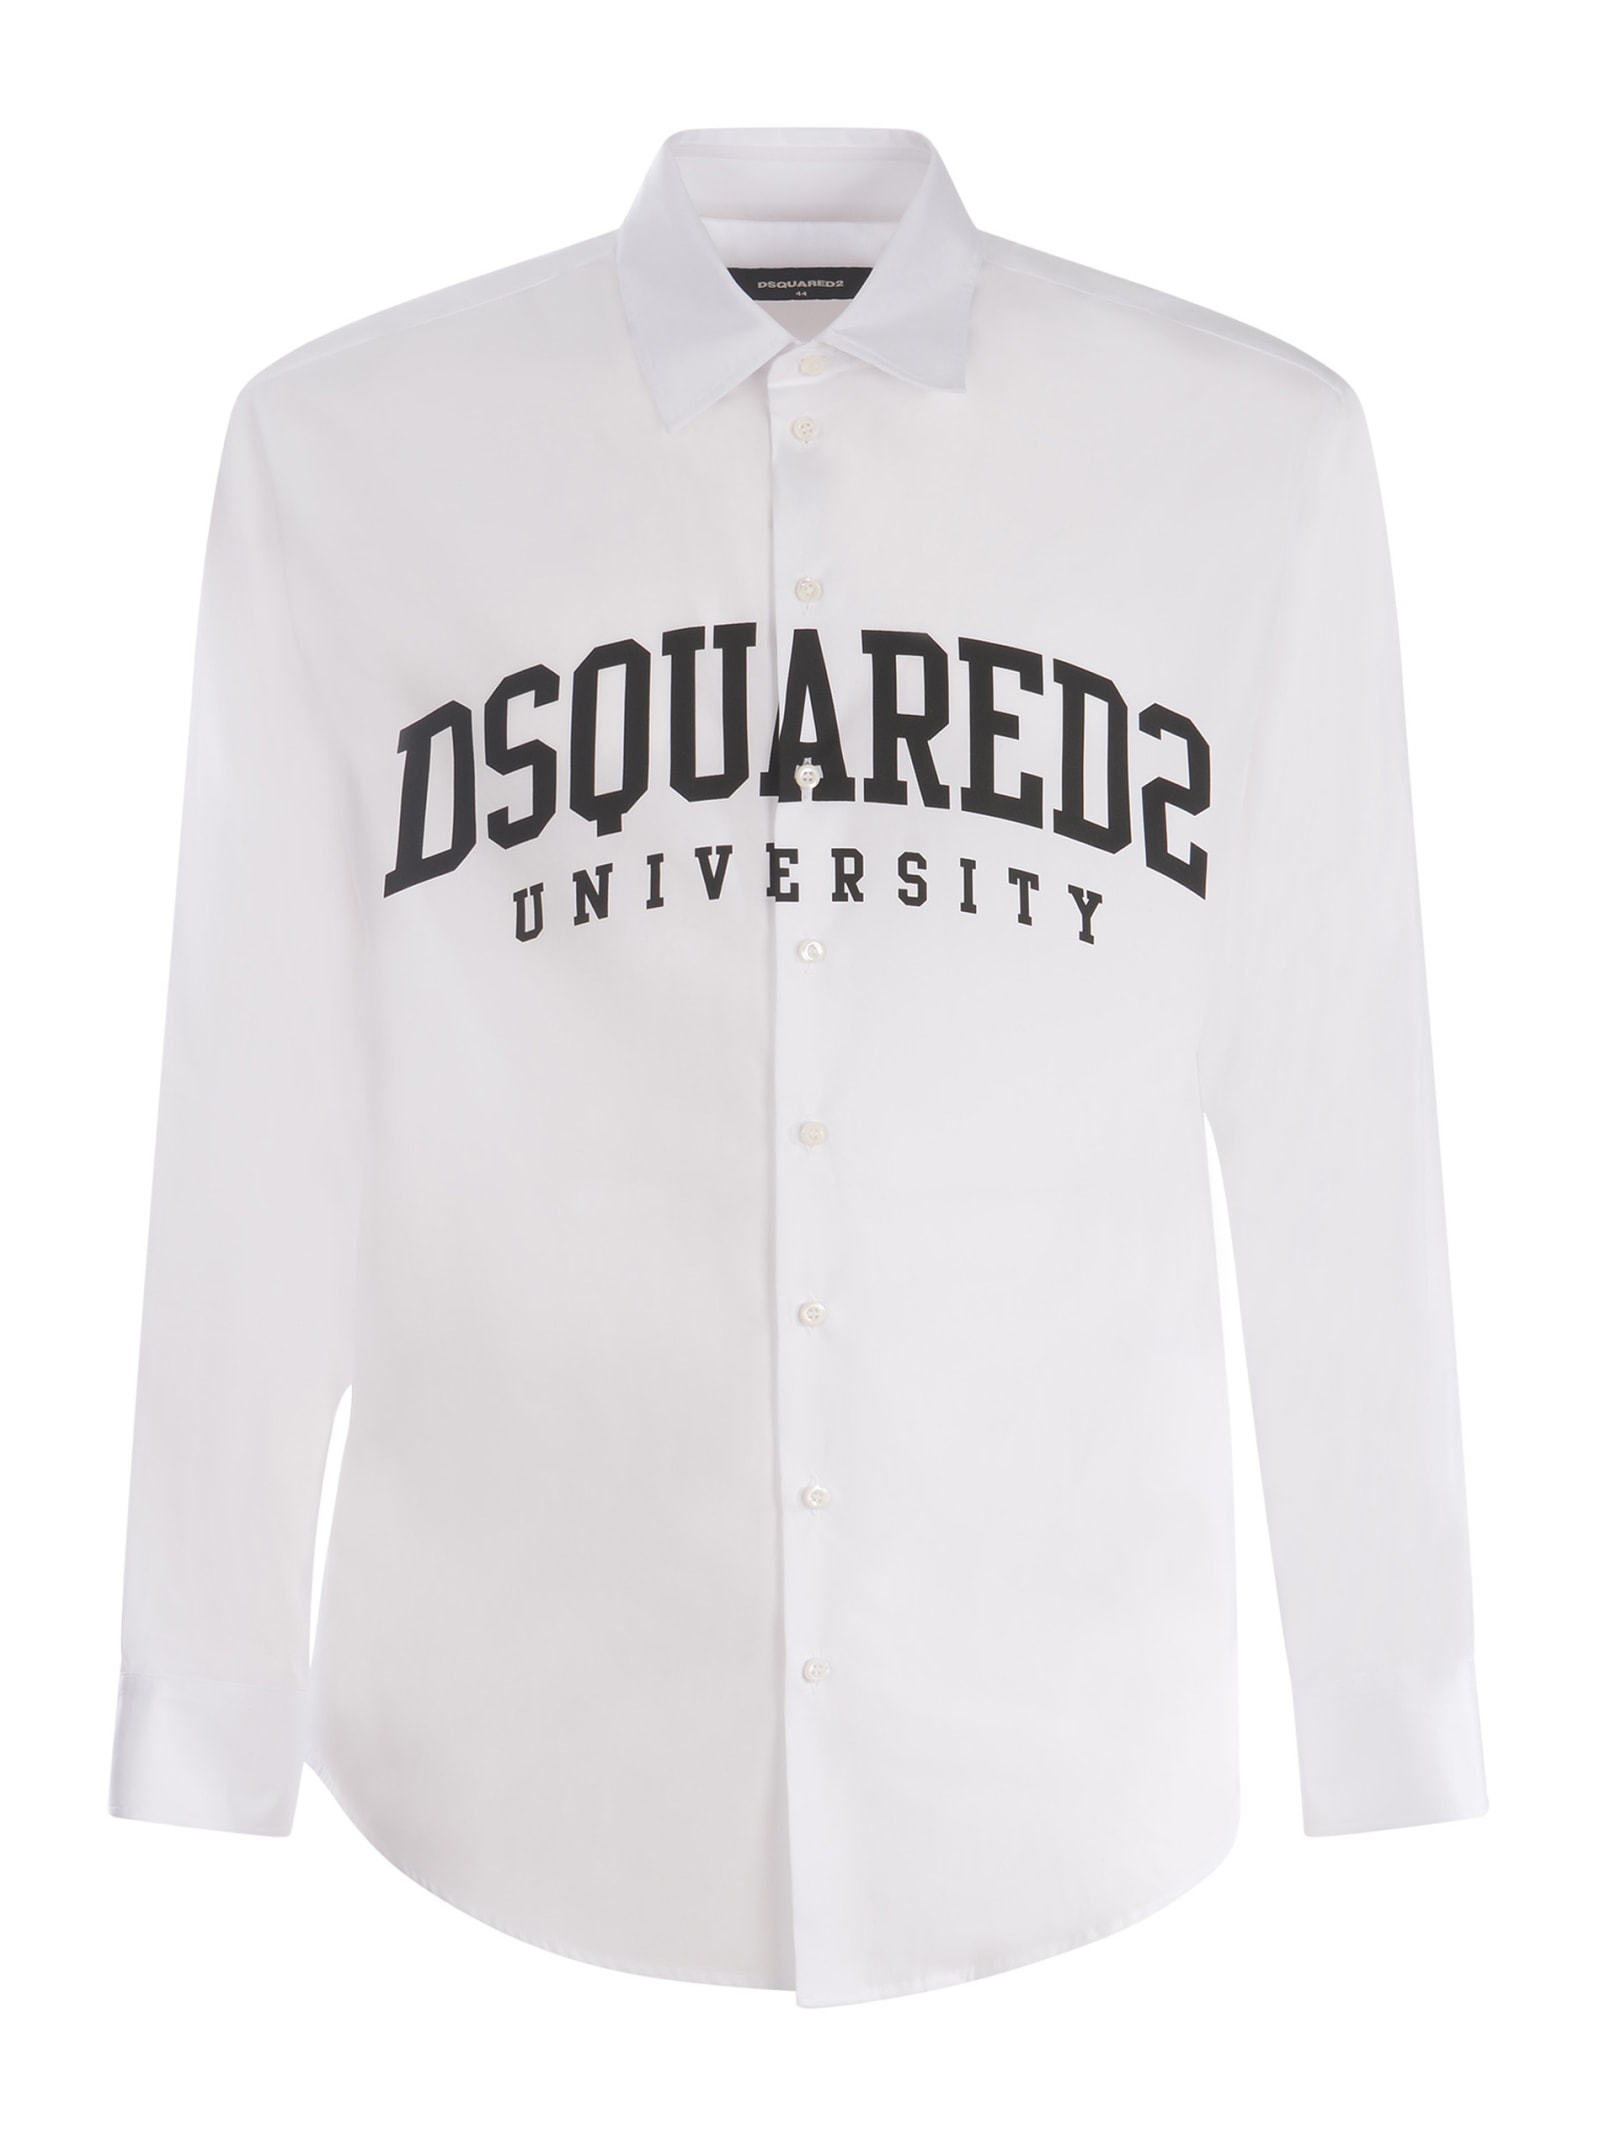 university Shirt